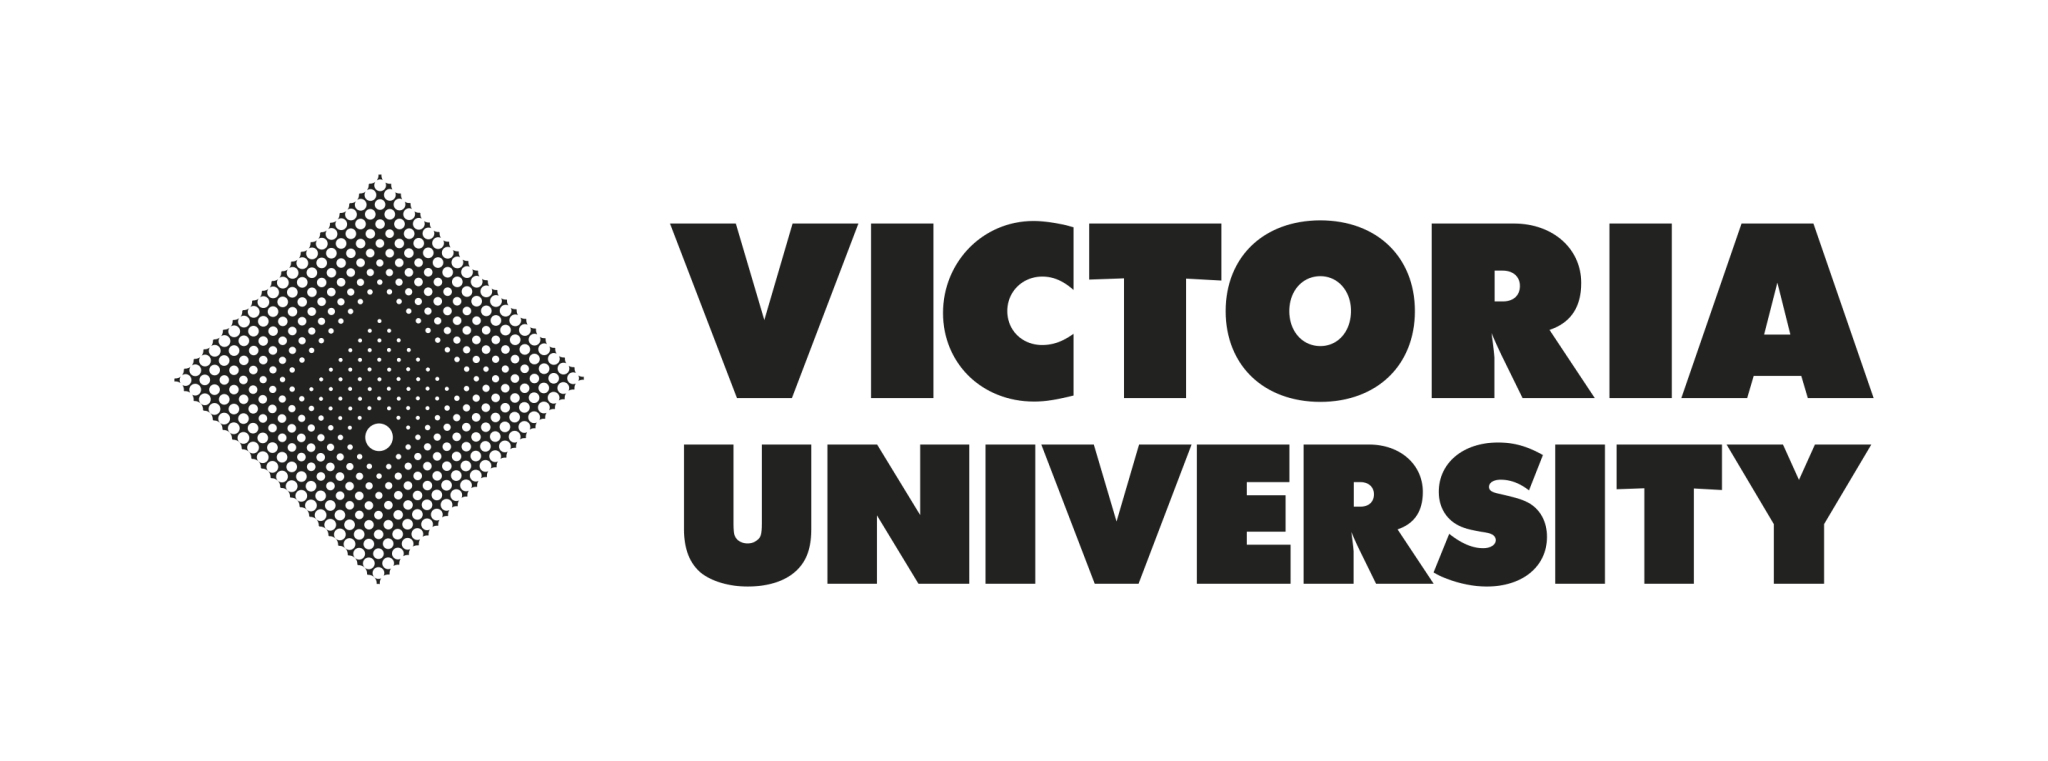 Victoria University Werribee Campus (10.110 Lab)